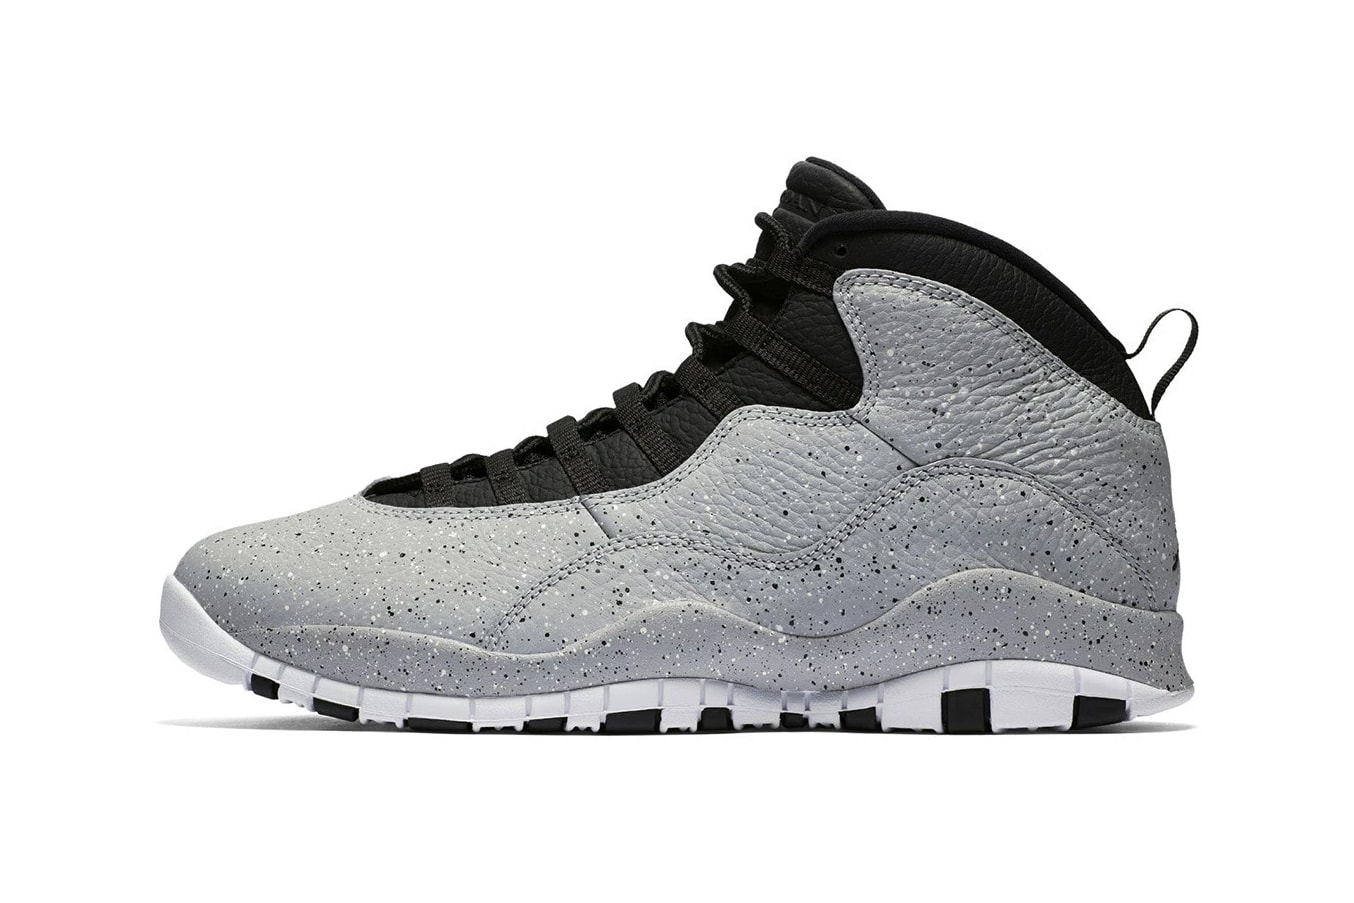 Air Jordan 10 Retro “Light Smoke” Release date jordan brand info drop sneaker footwear black white grey speckled Michael jordan